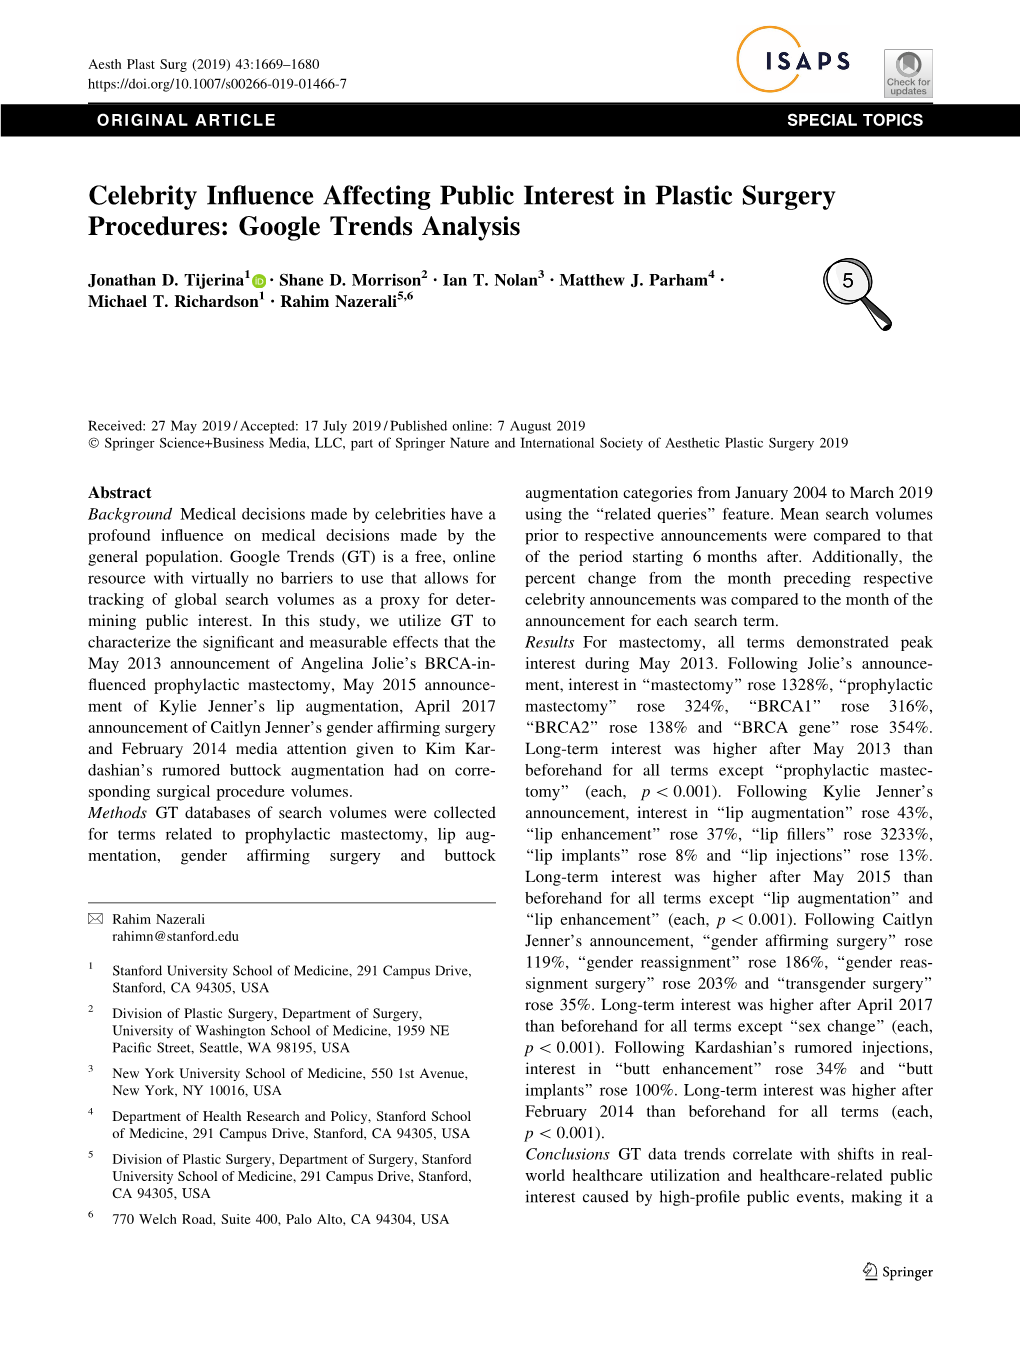 Celebrity Influence Affecting Public Interest in Plastic Surgery Procedures